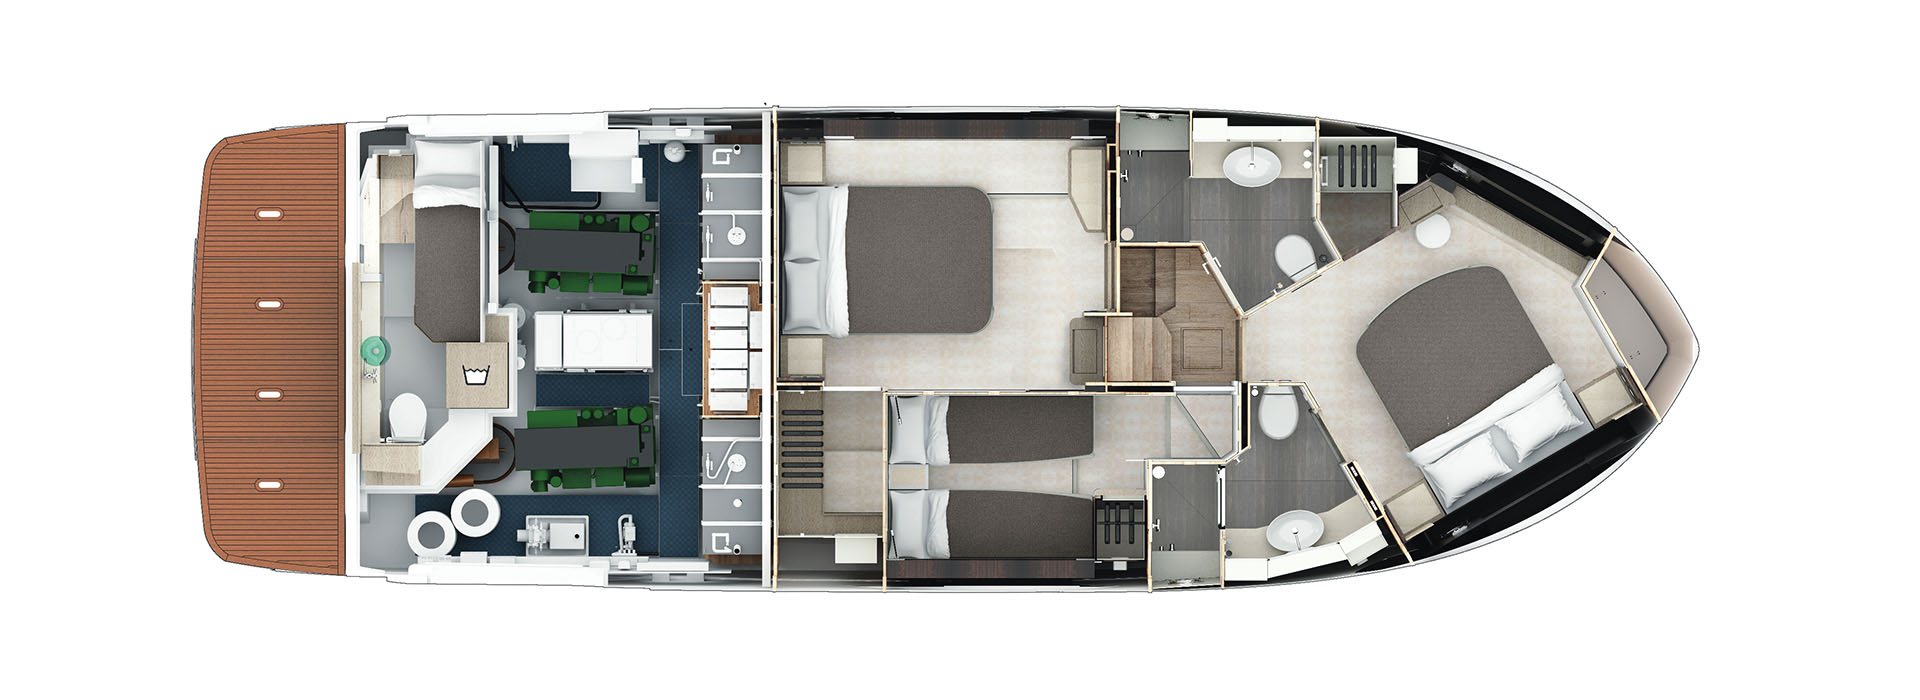 Lower deck